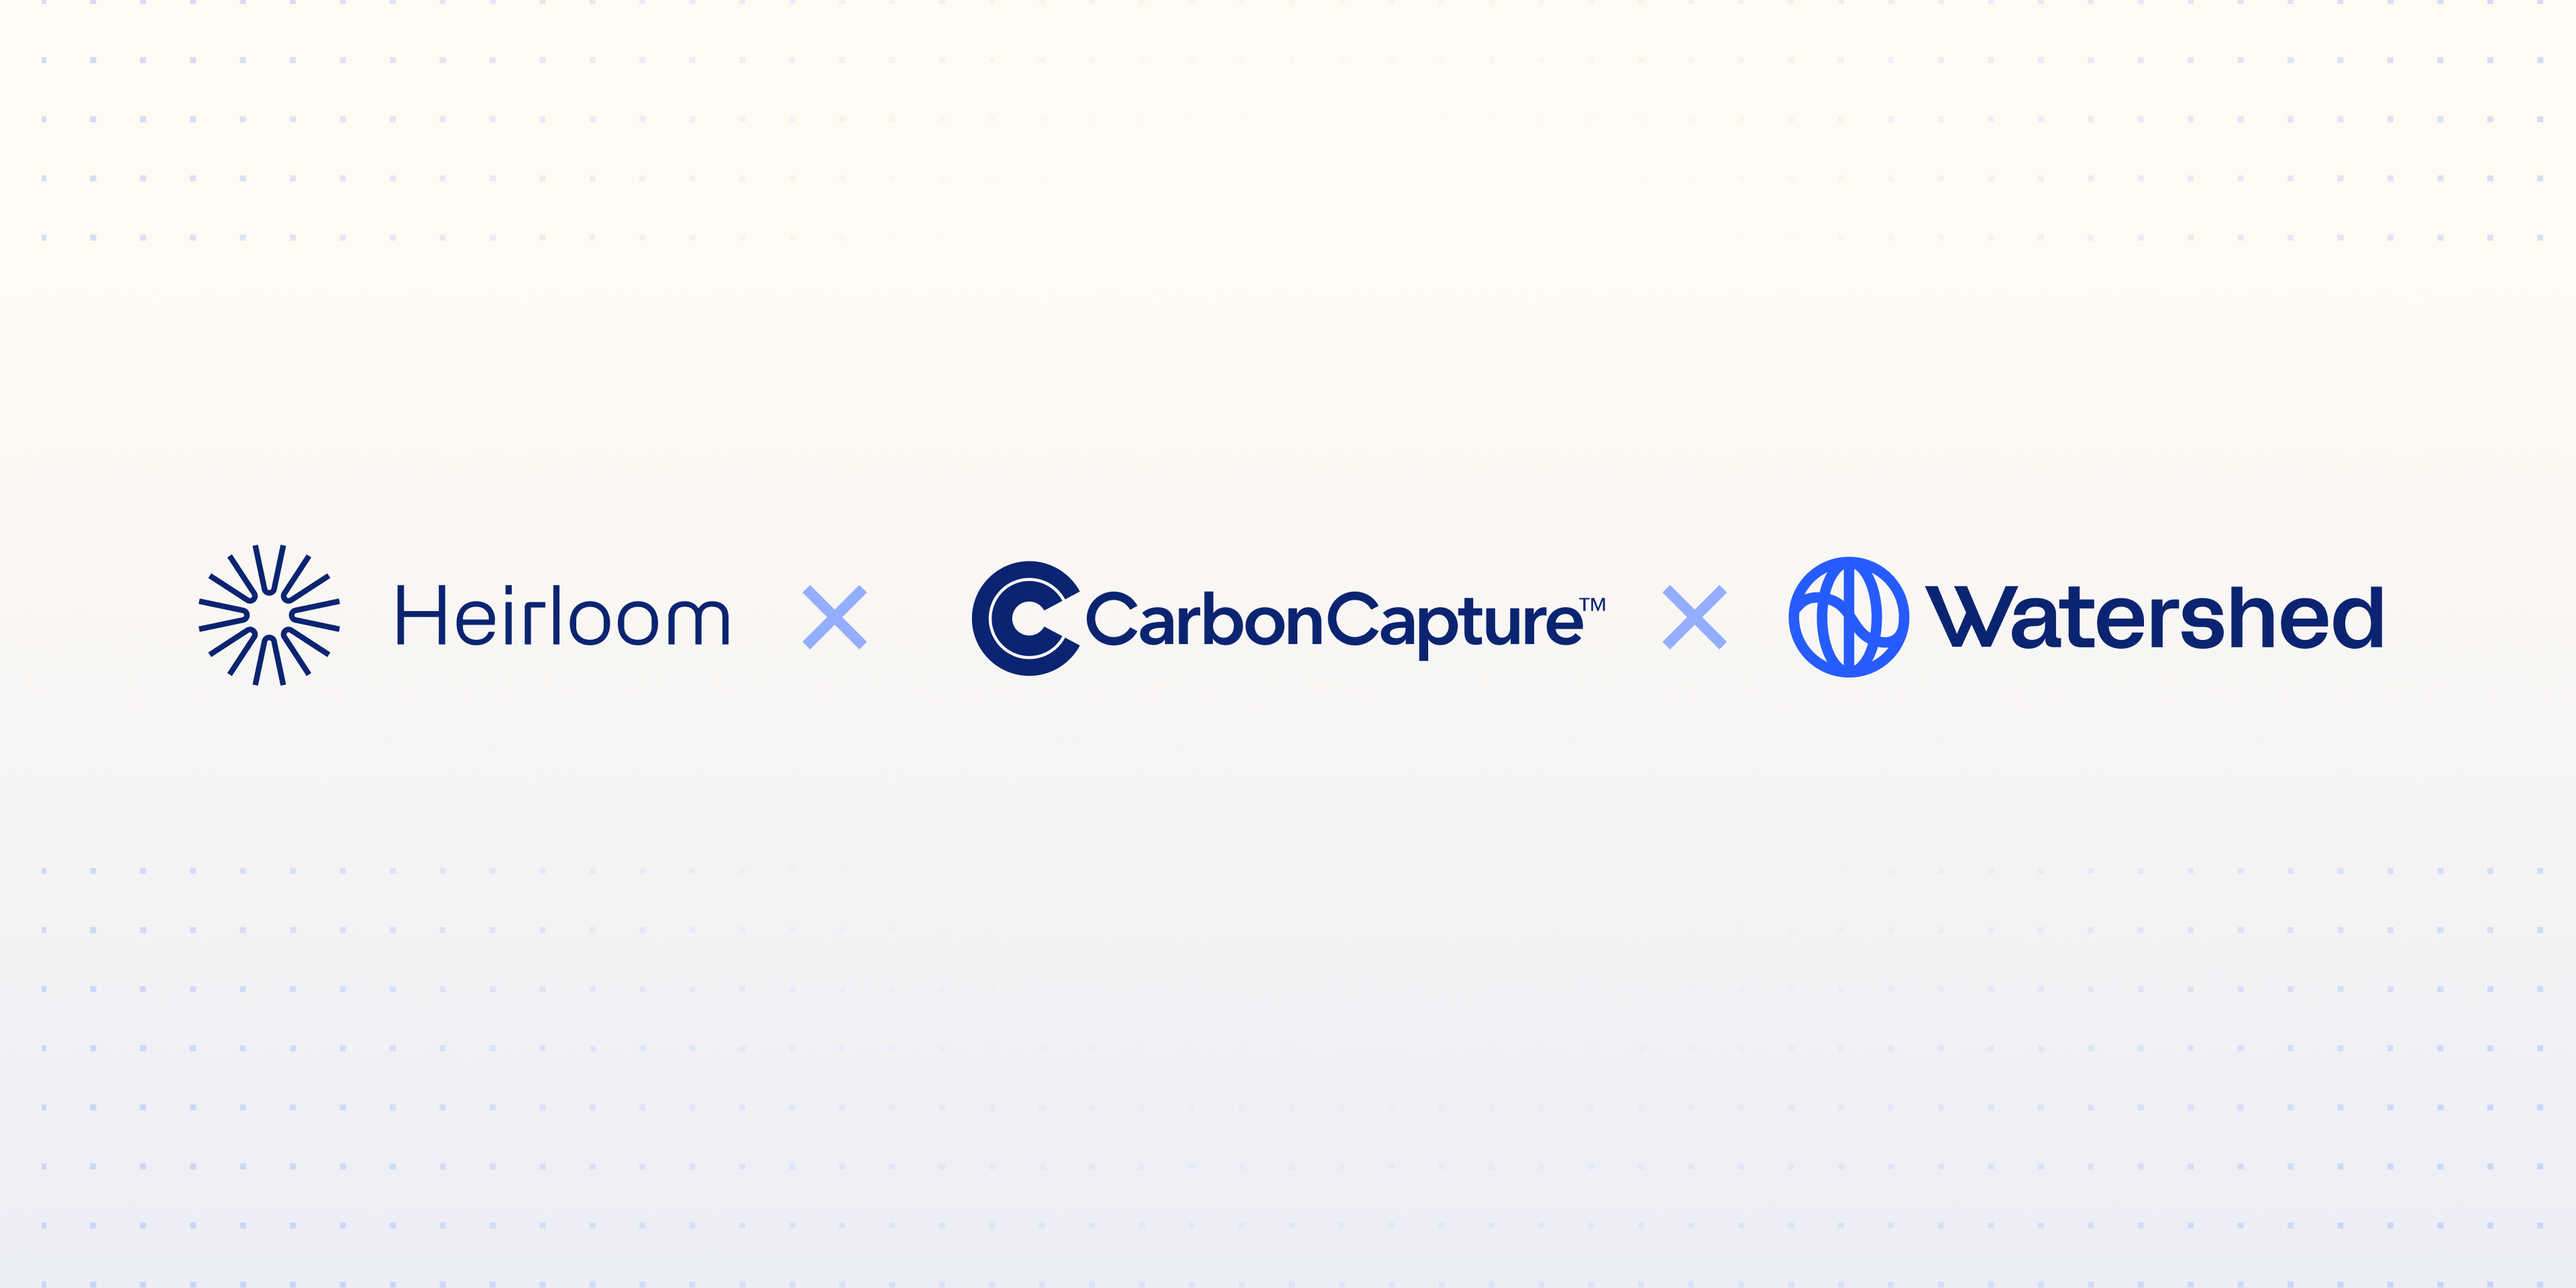 Heirloom, CarbonCapture, and Watershed logos